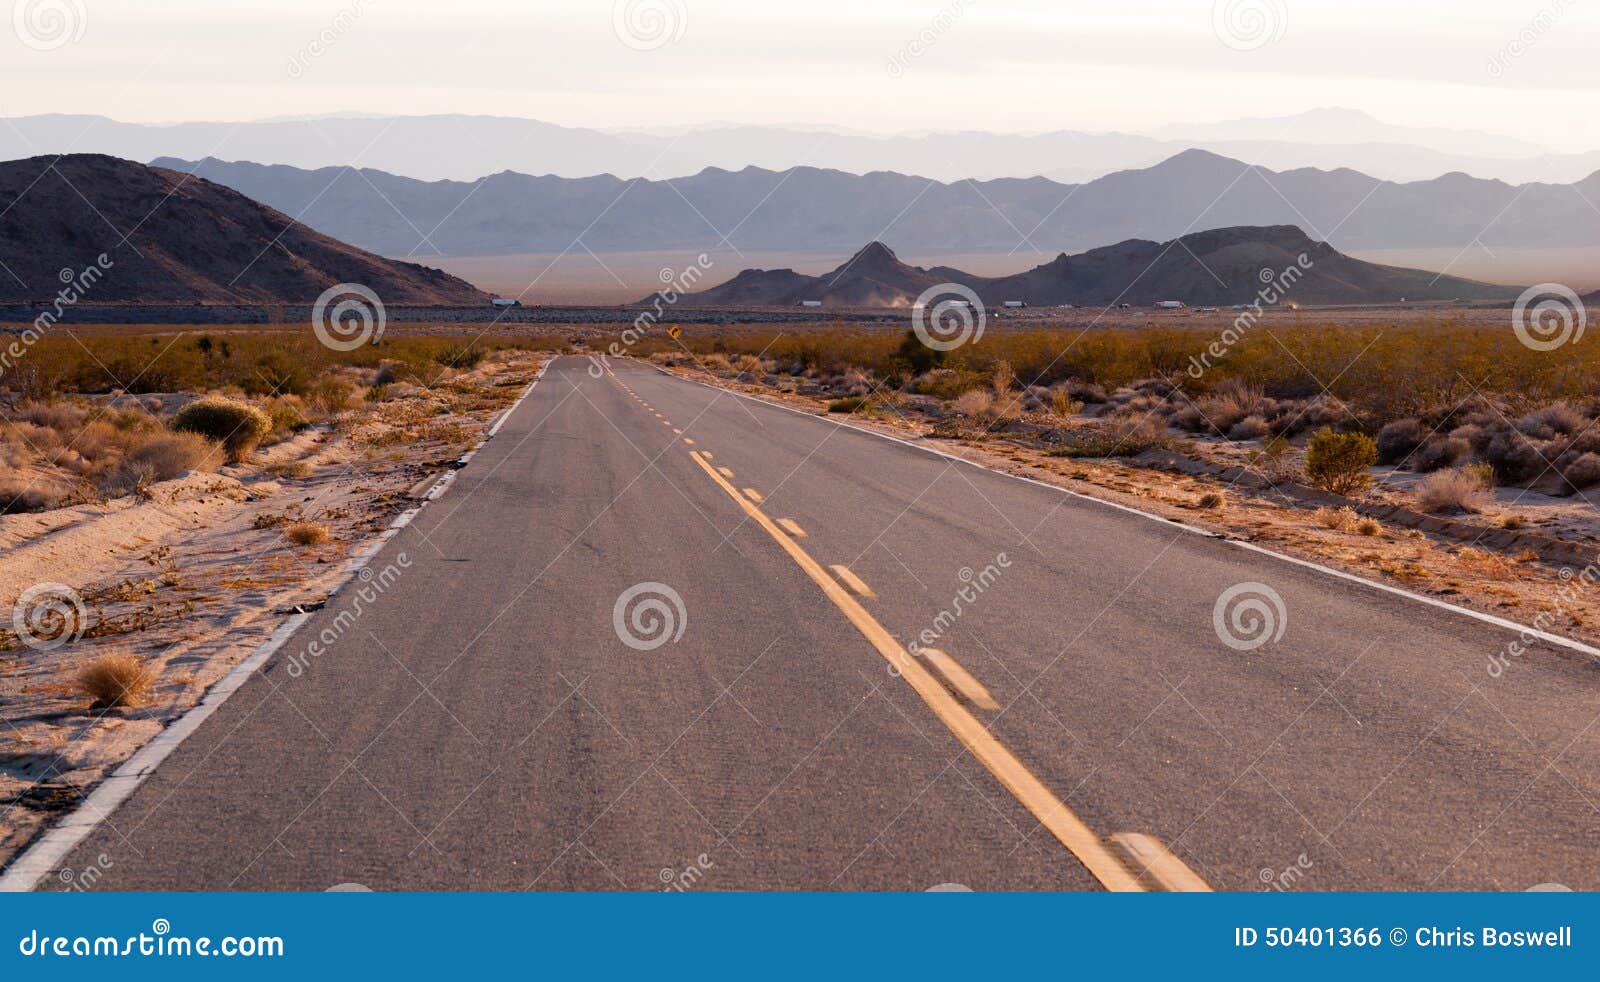 Kelbaker Road Approaches Needles Freeway US 40 California Desert Stock ...